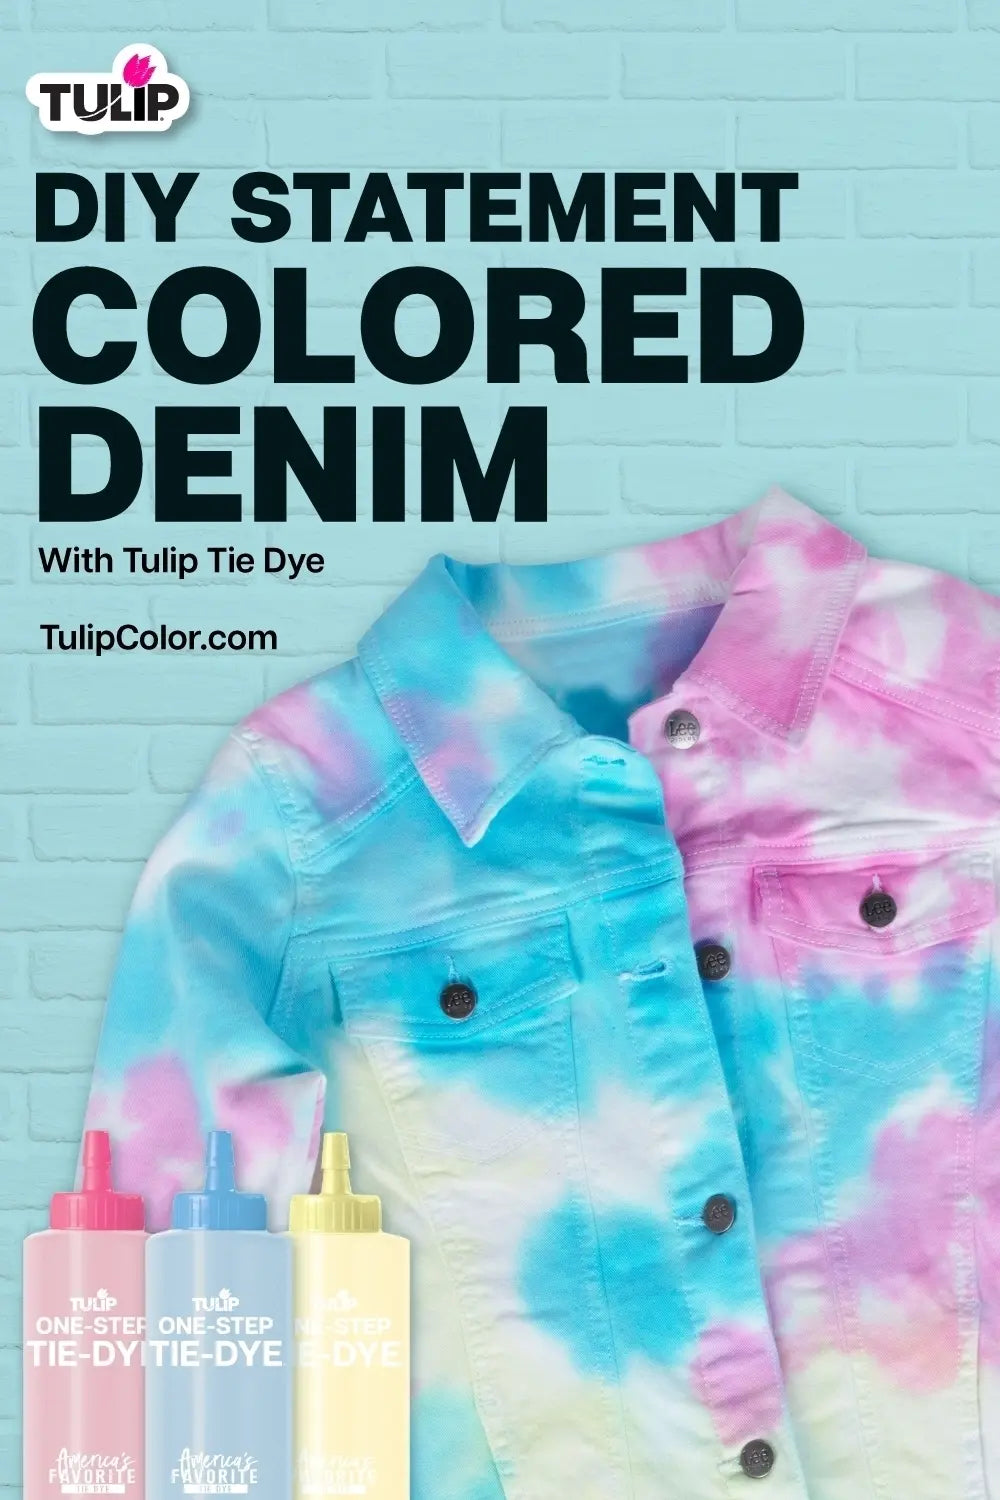 DIY Statement Colored Denim with Tie Dye